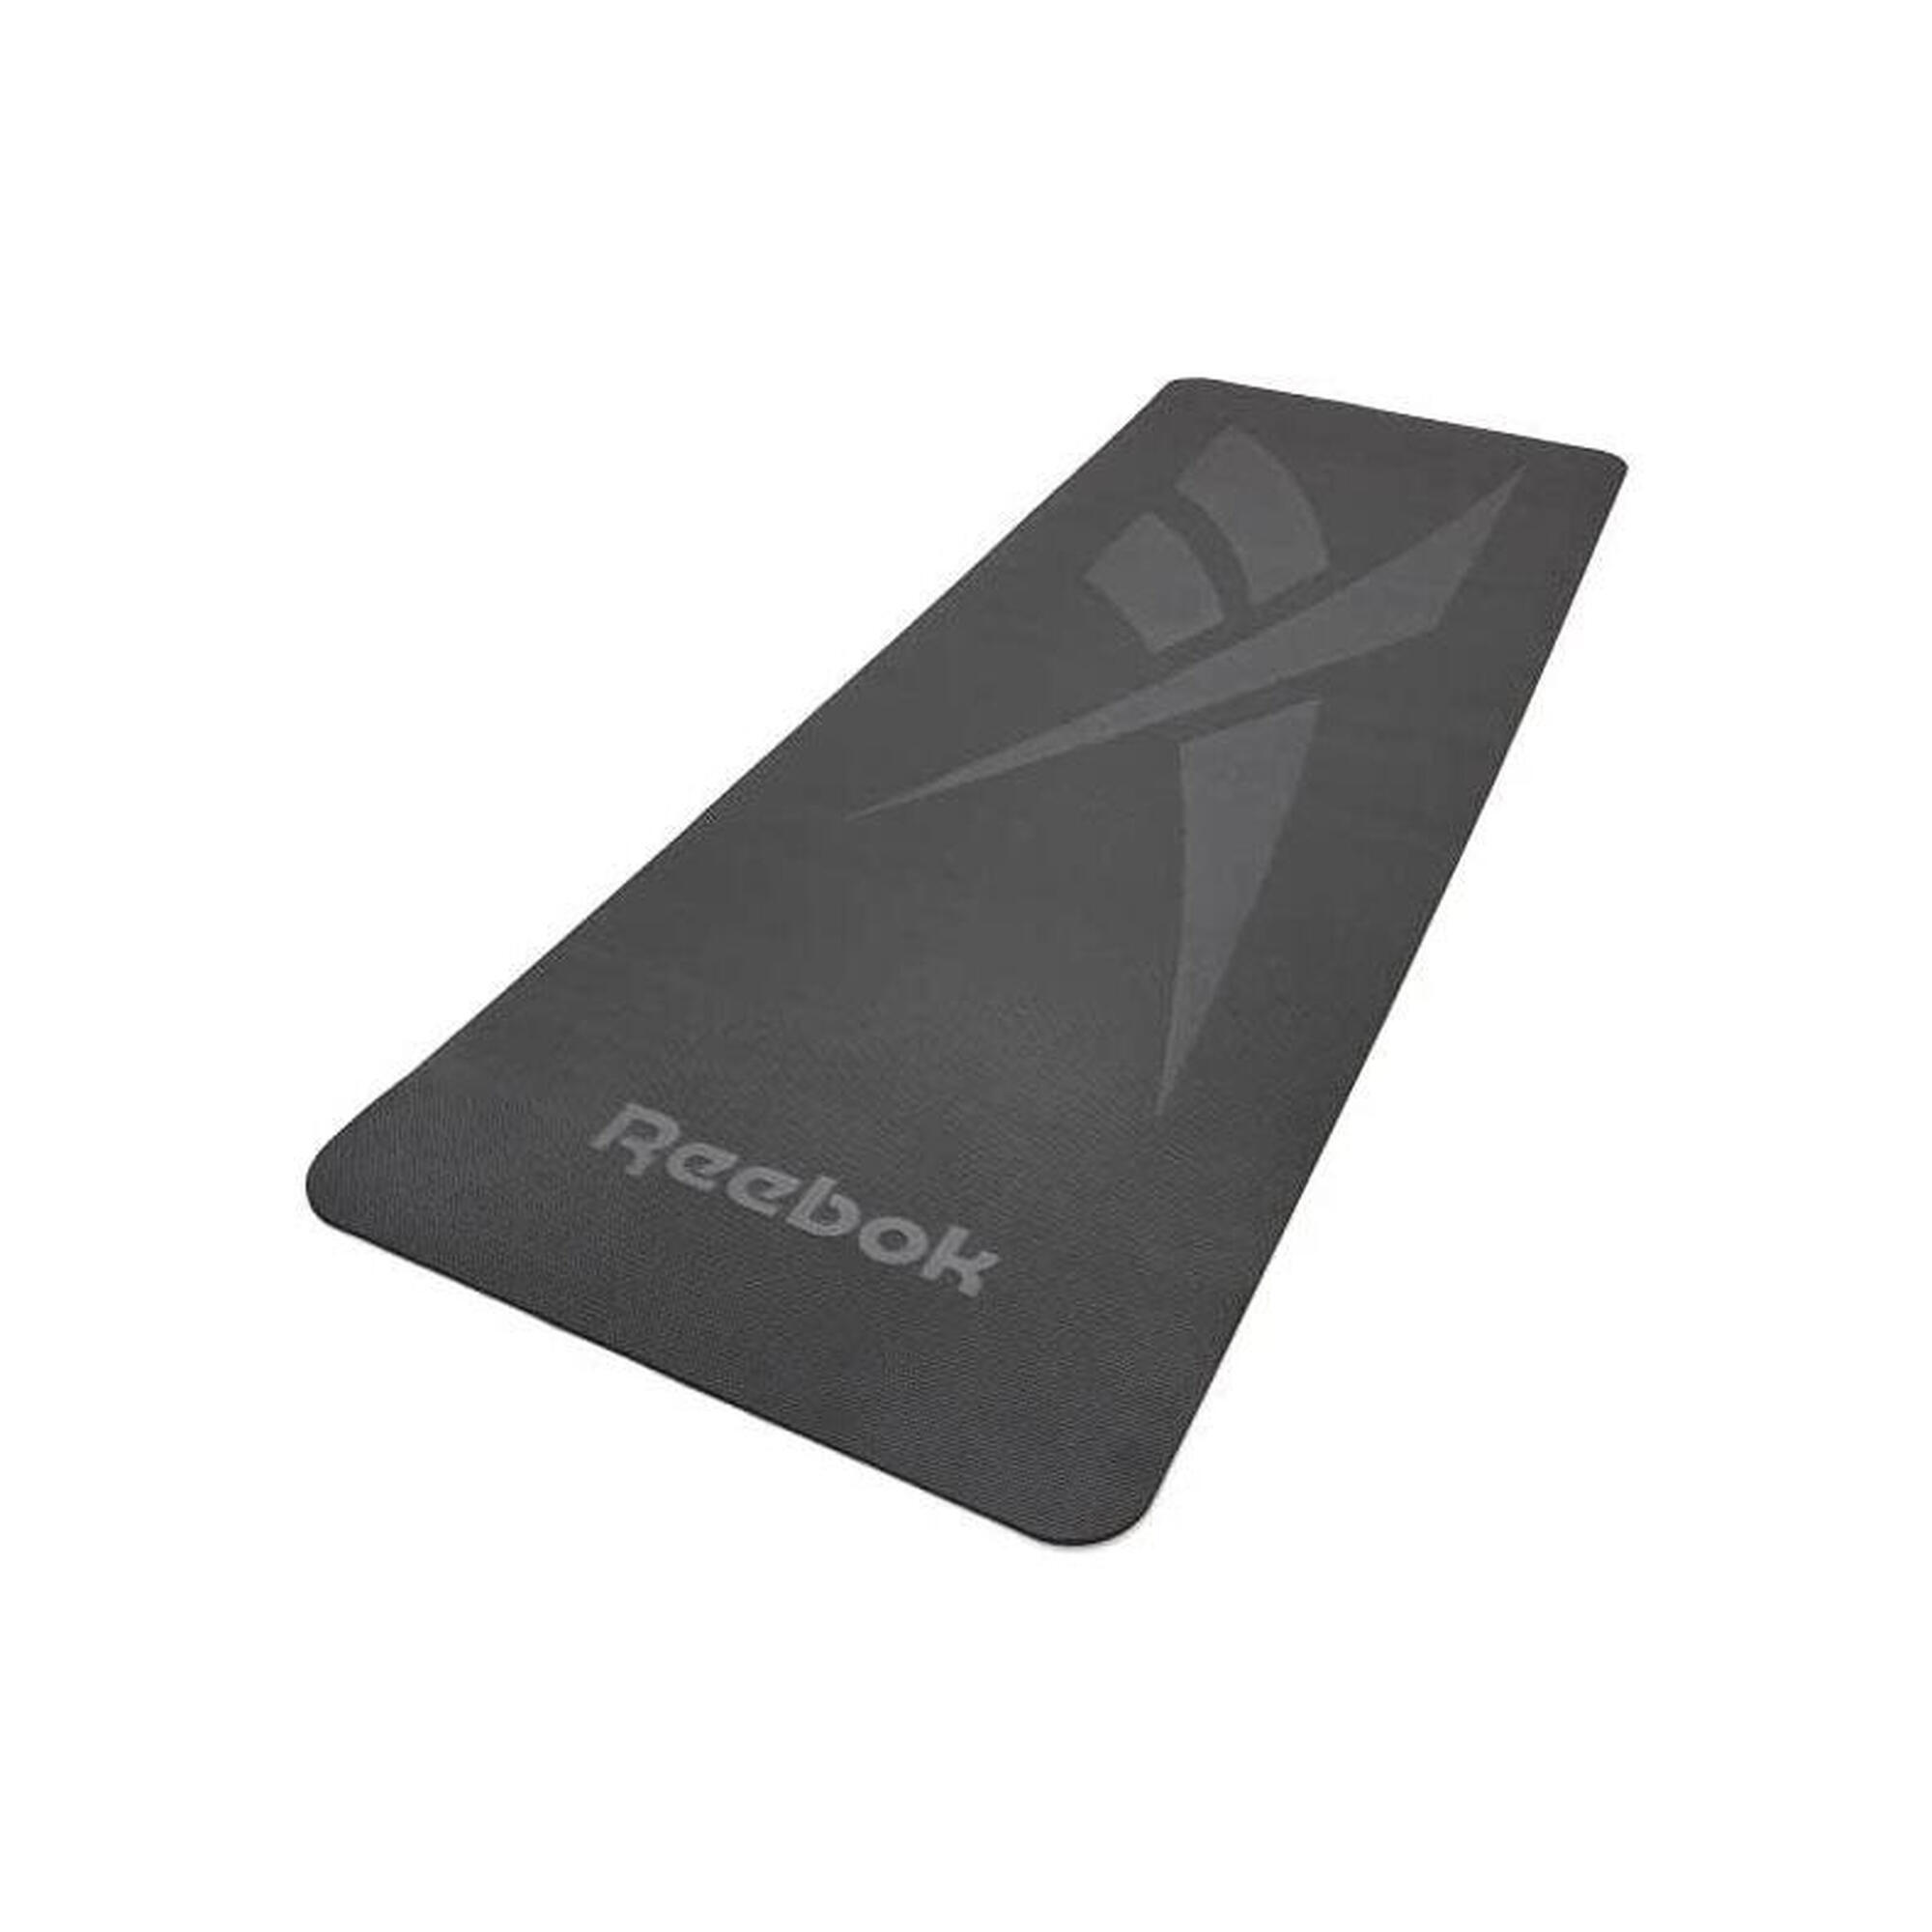 Esterilla de Yoga Reebok - 5mm - Negra